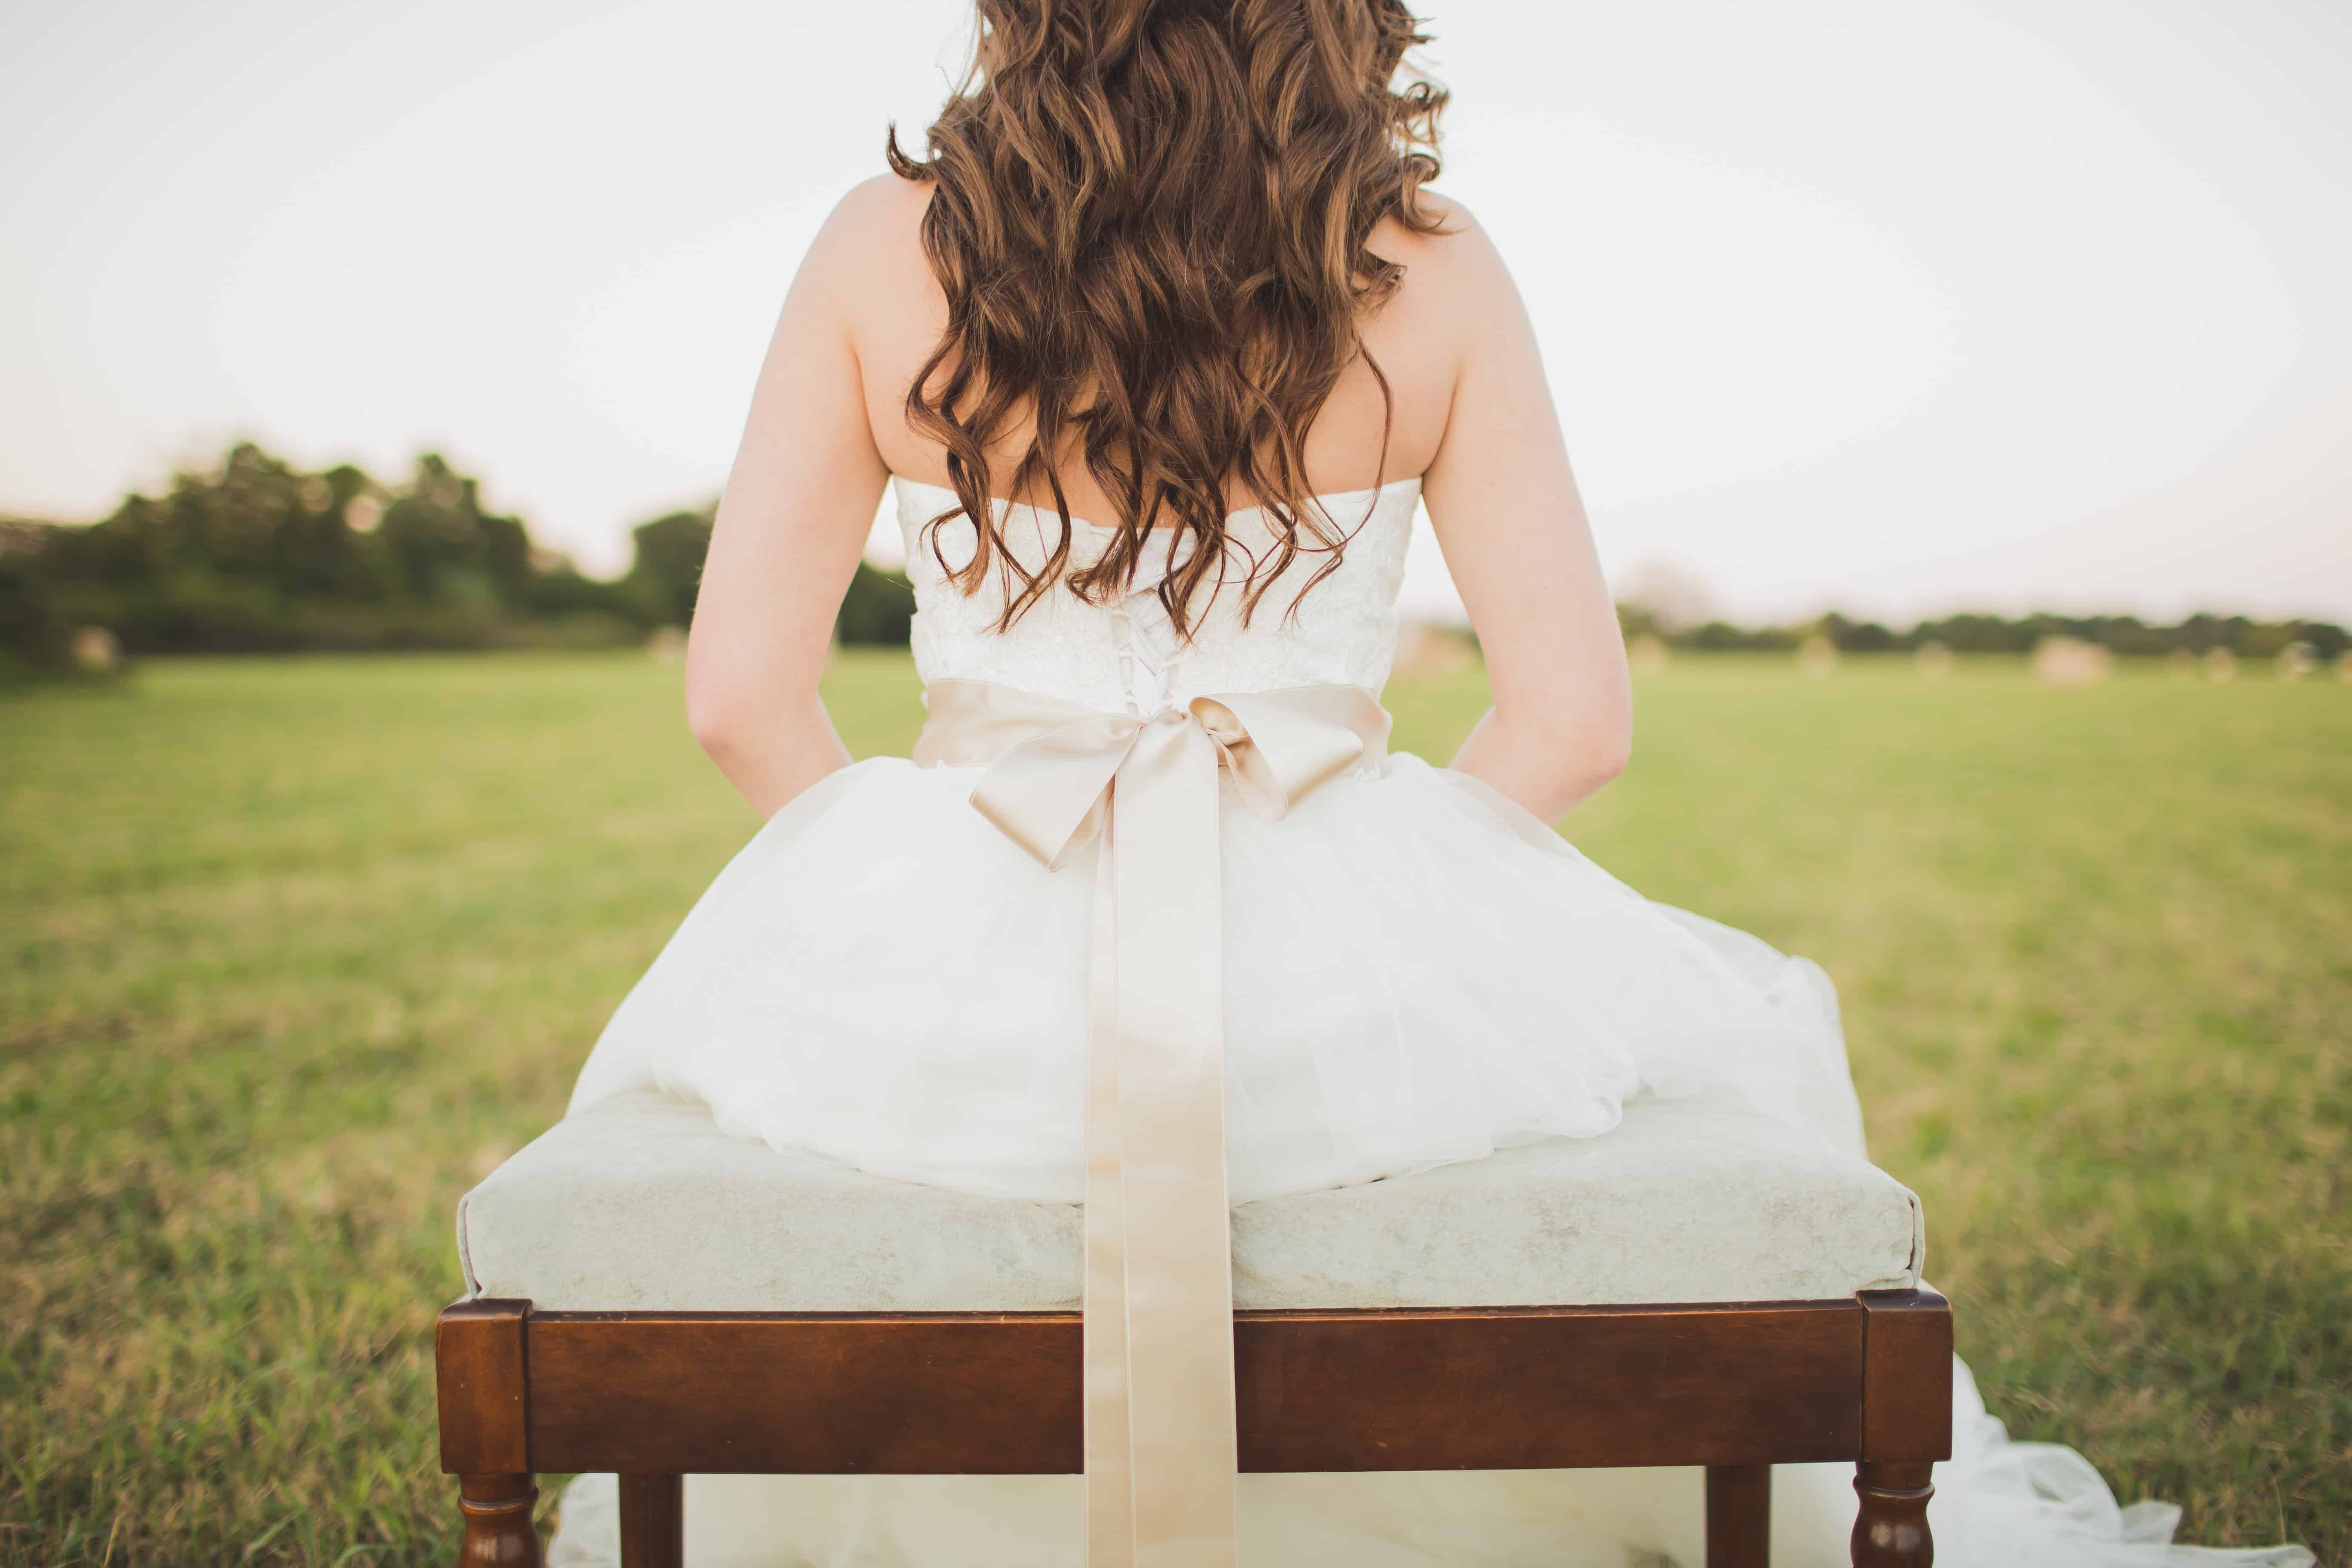 sitting woman wearing white dress